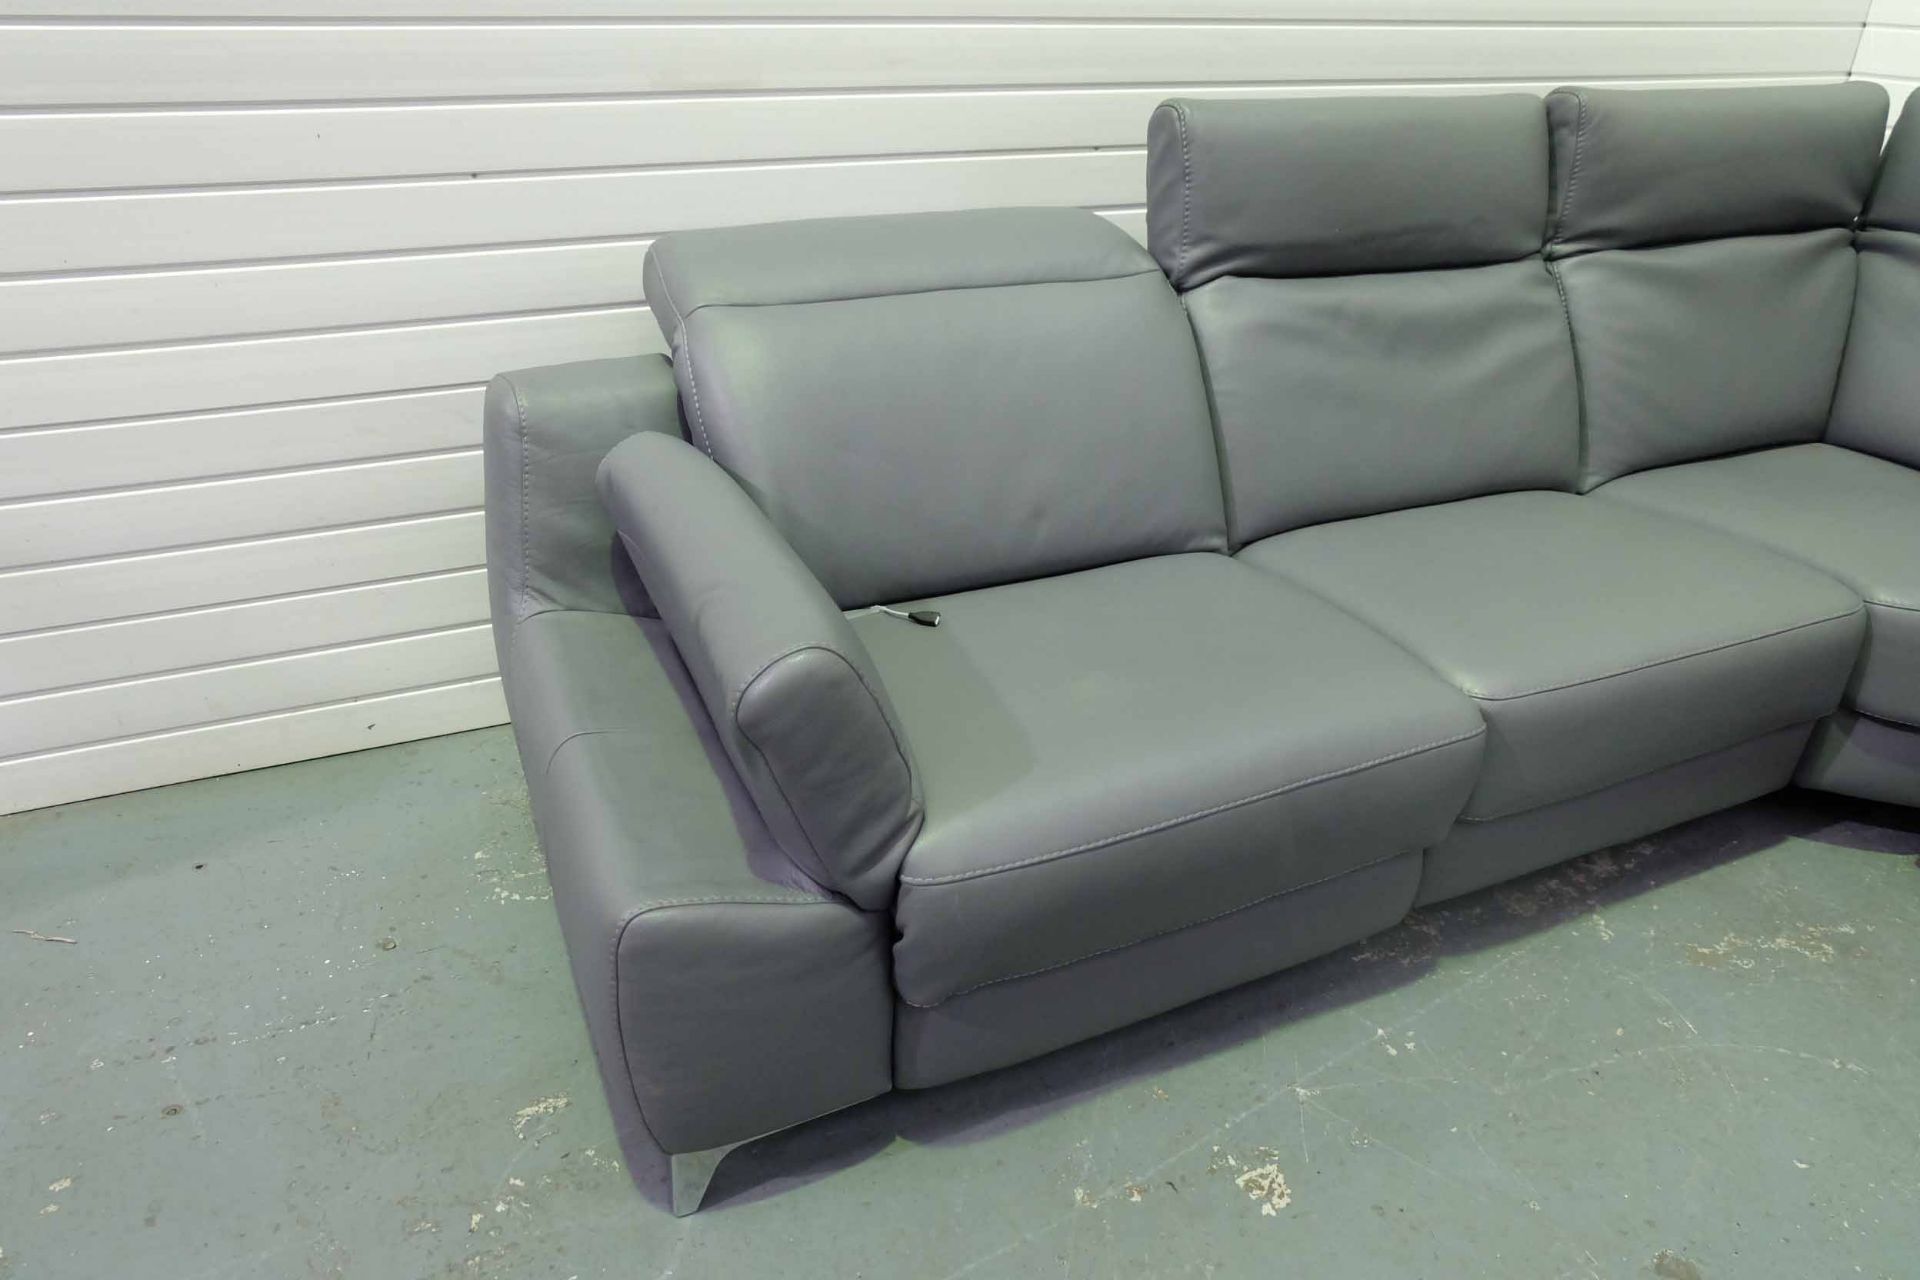 ROM 'Nevada' Corner Group Sofa. Montana Grey Leather. Left Hand Seat Reclines & Headrest. - Image 5 of 8